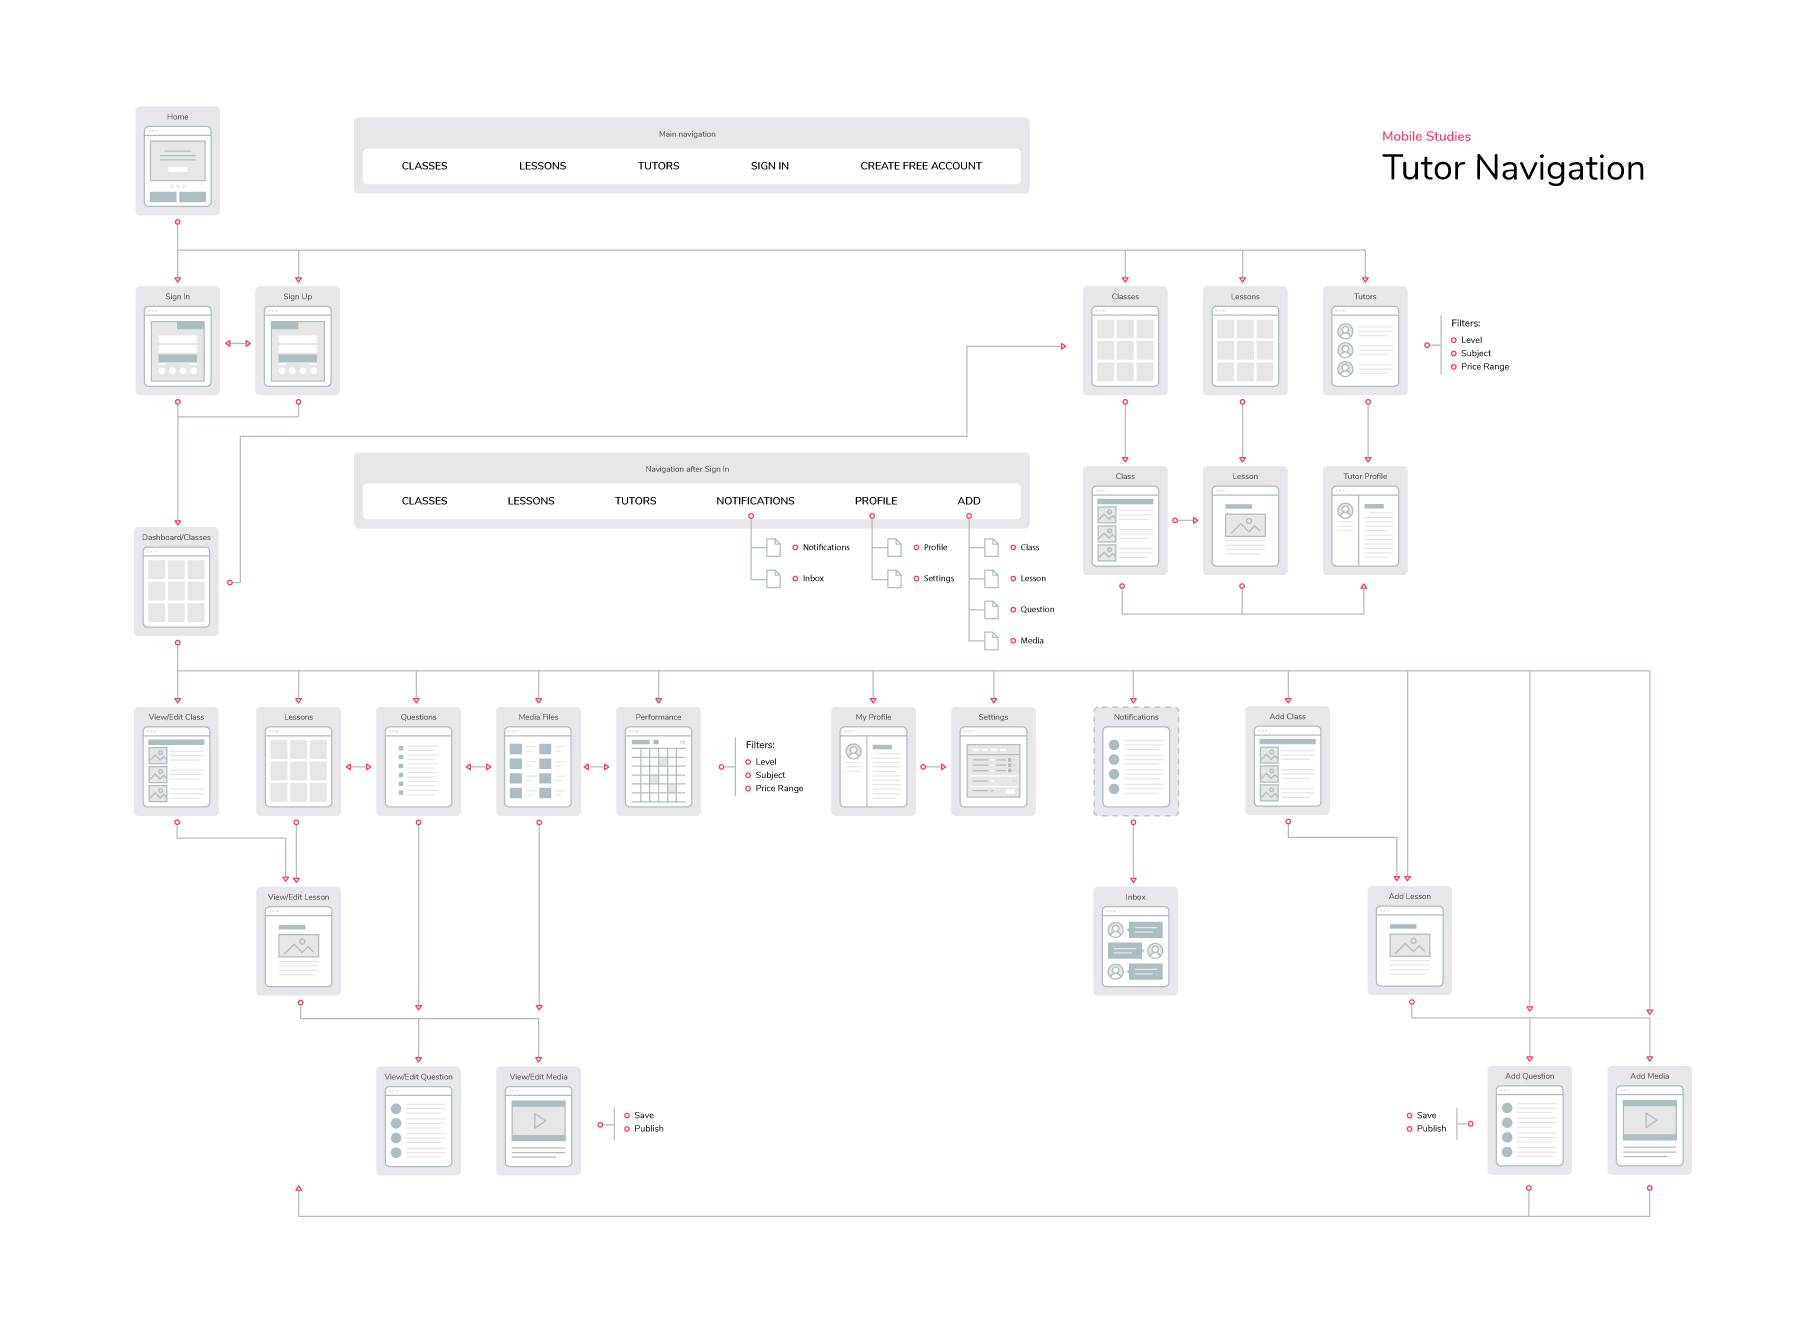 Design Portfolio - Mobile Studies Learning Management System - Tutor Navigation Flow Chart - leowhouteng